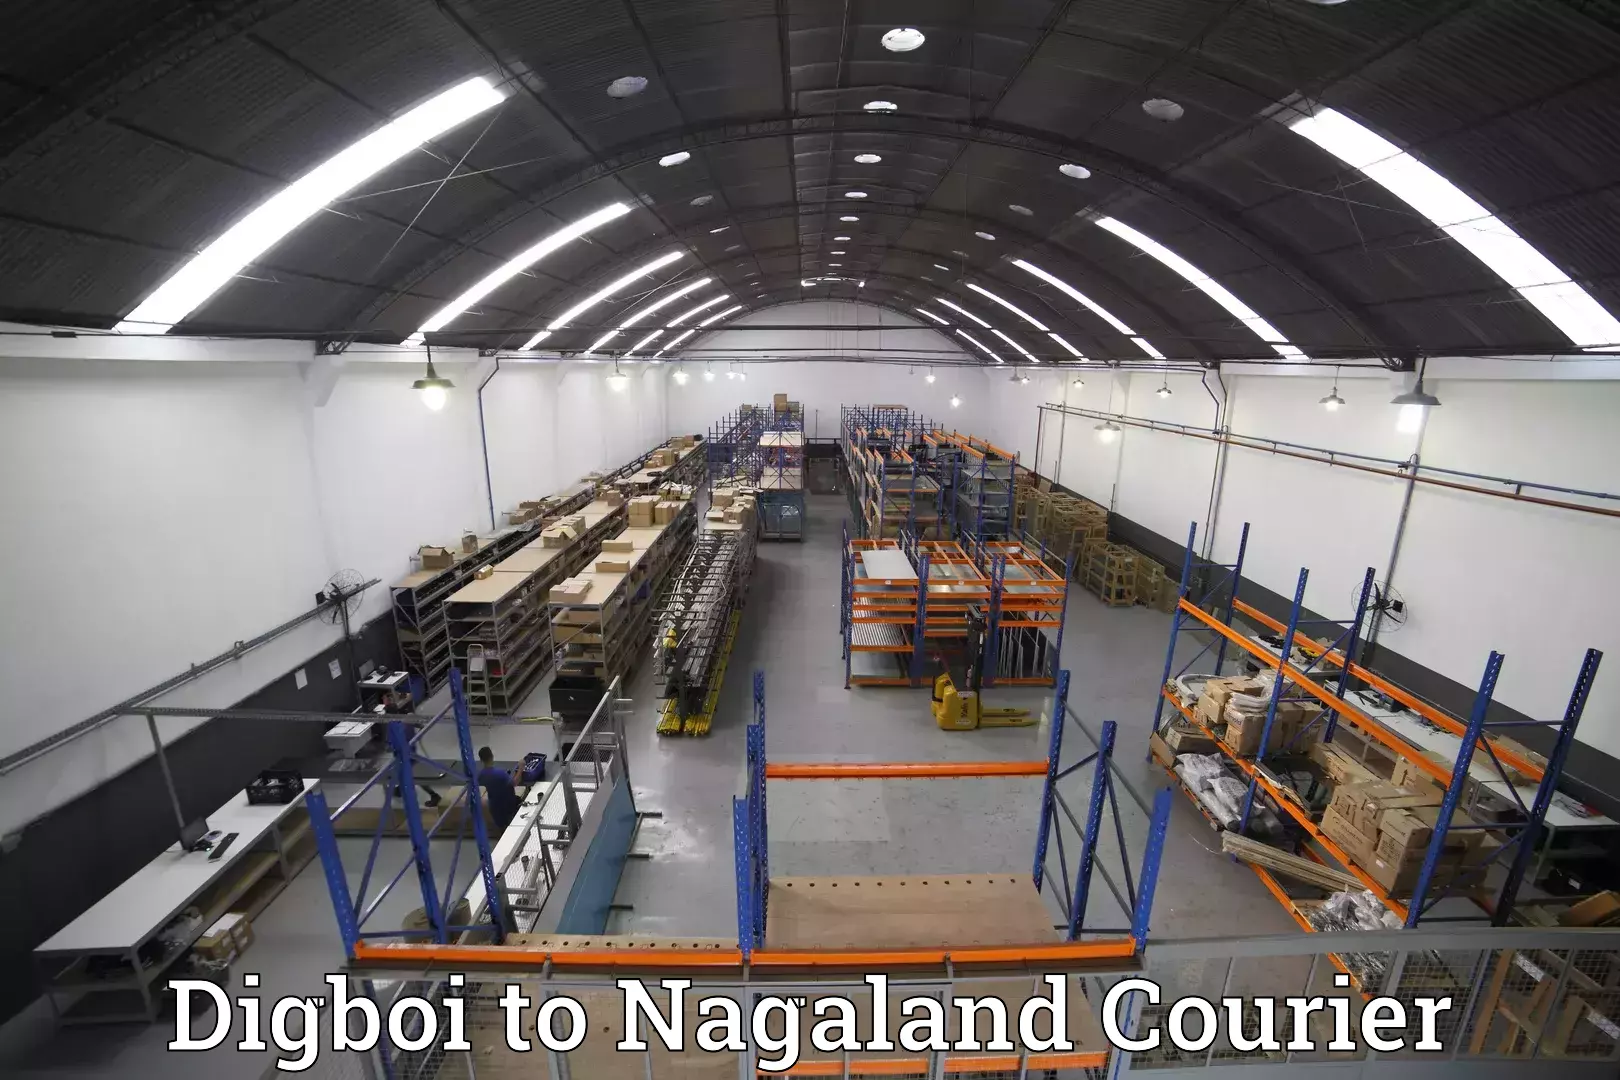 Baggage transport network Digboi to Nagaland